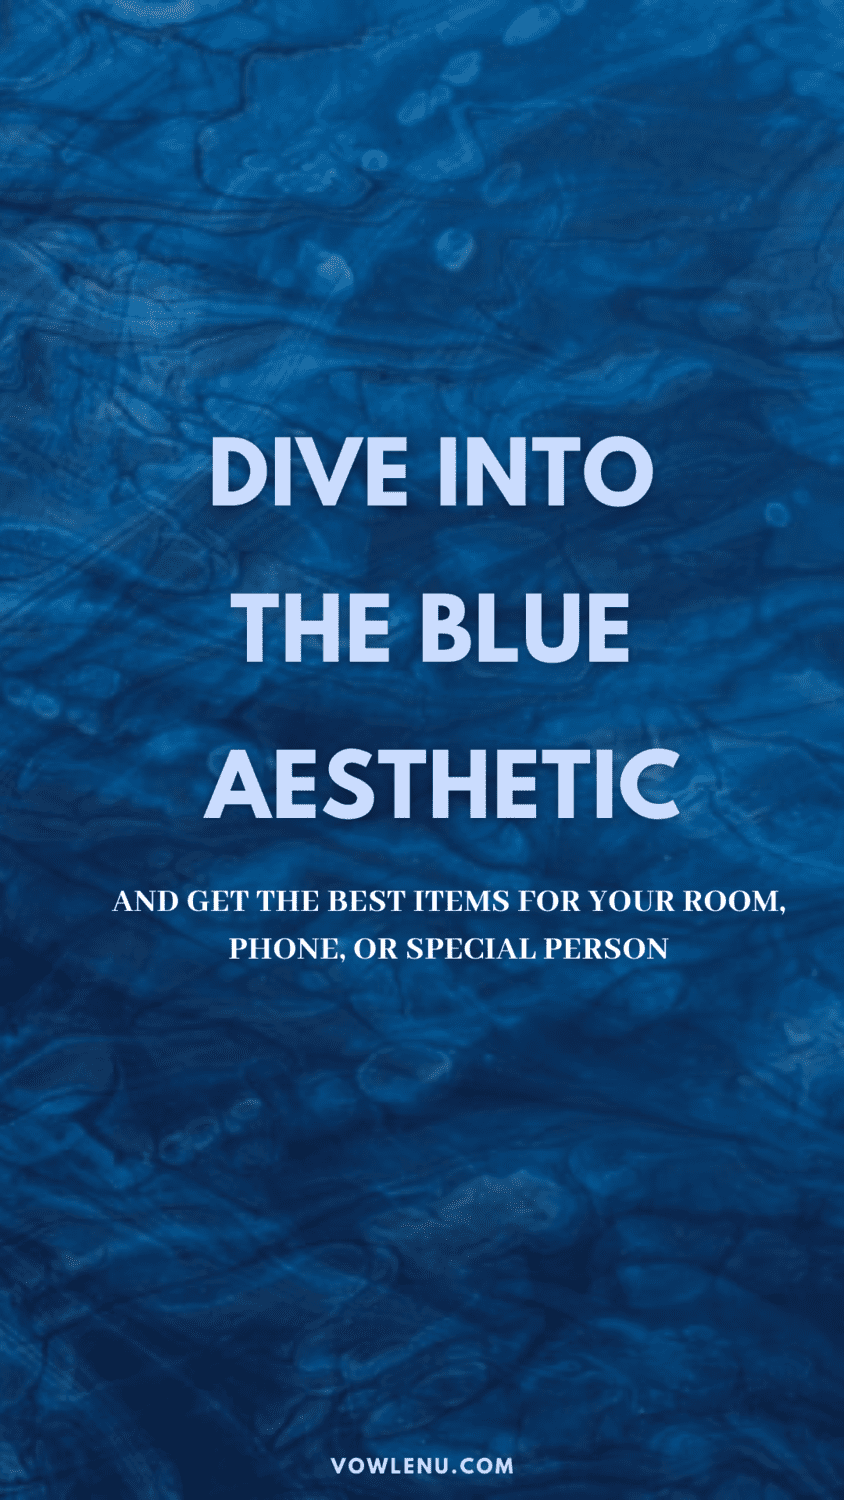 Blue aesthetic explained